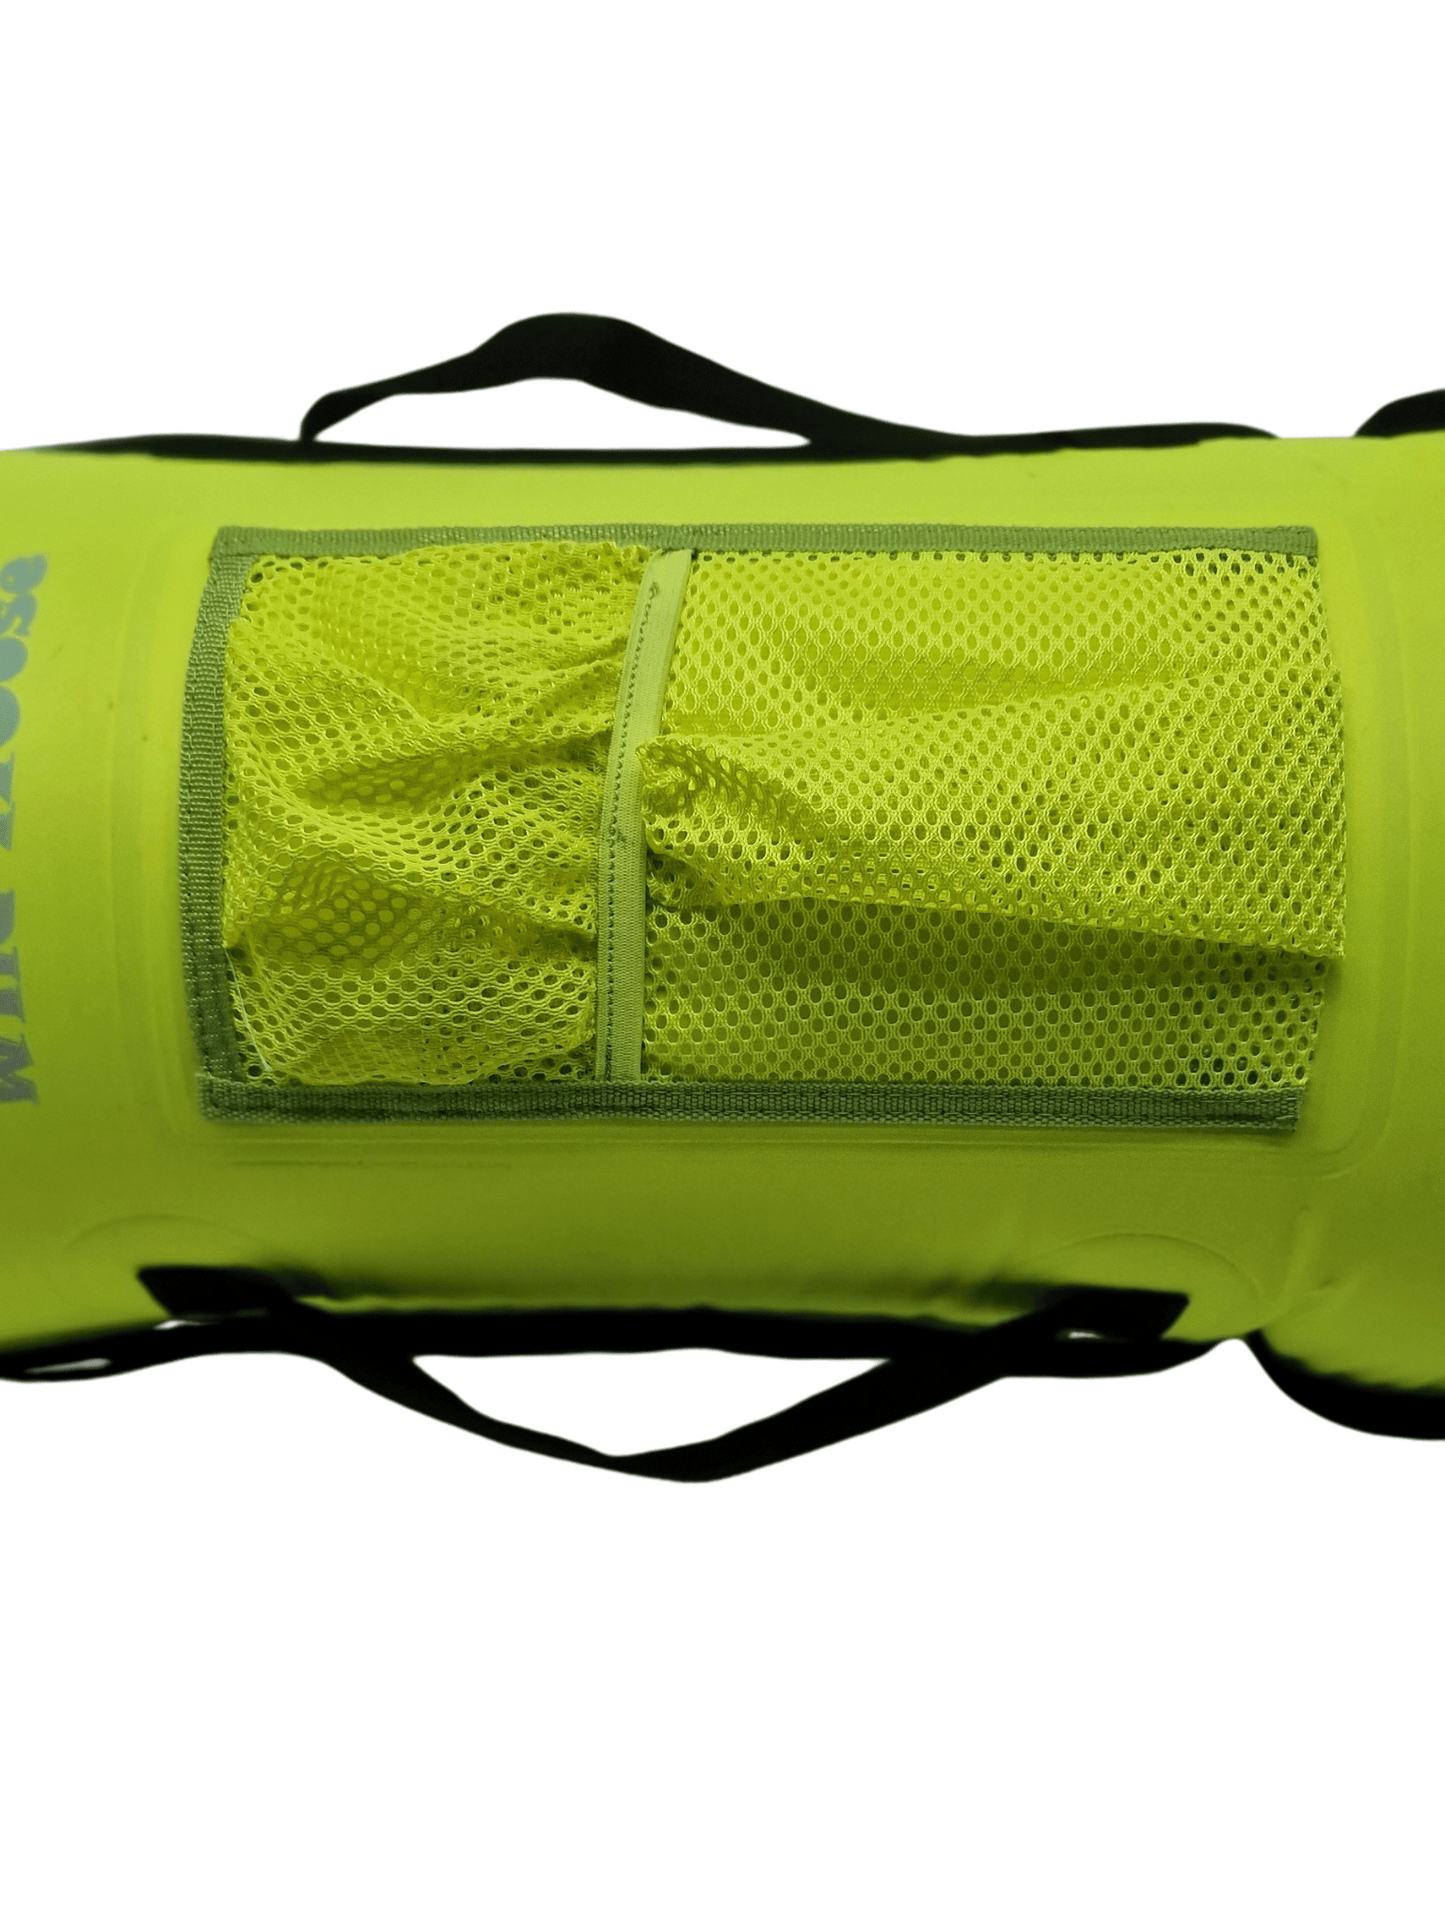 mesh pocket of neon yellow tow float